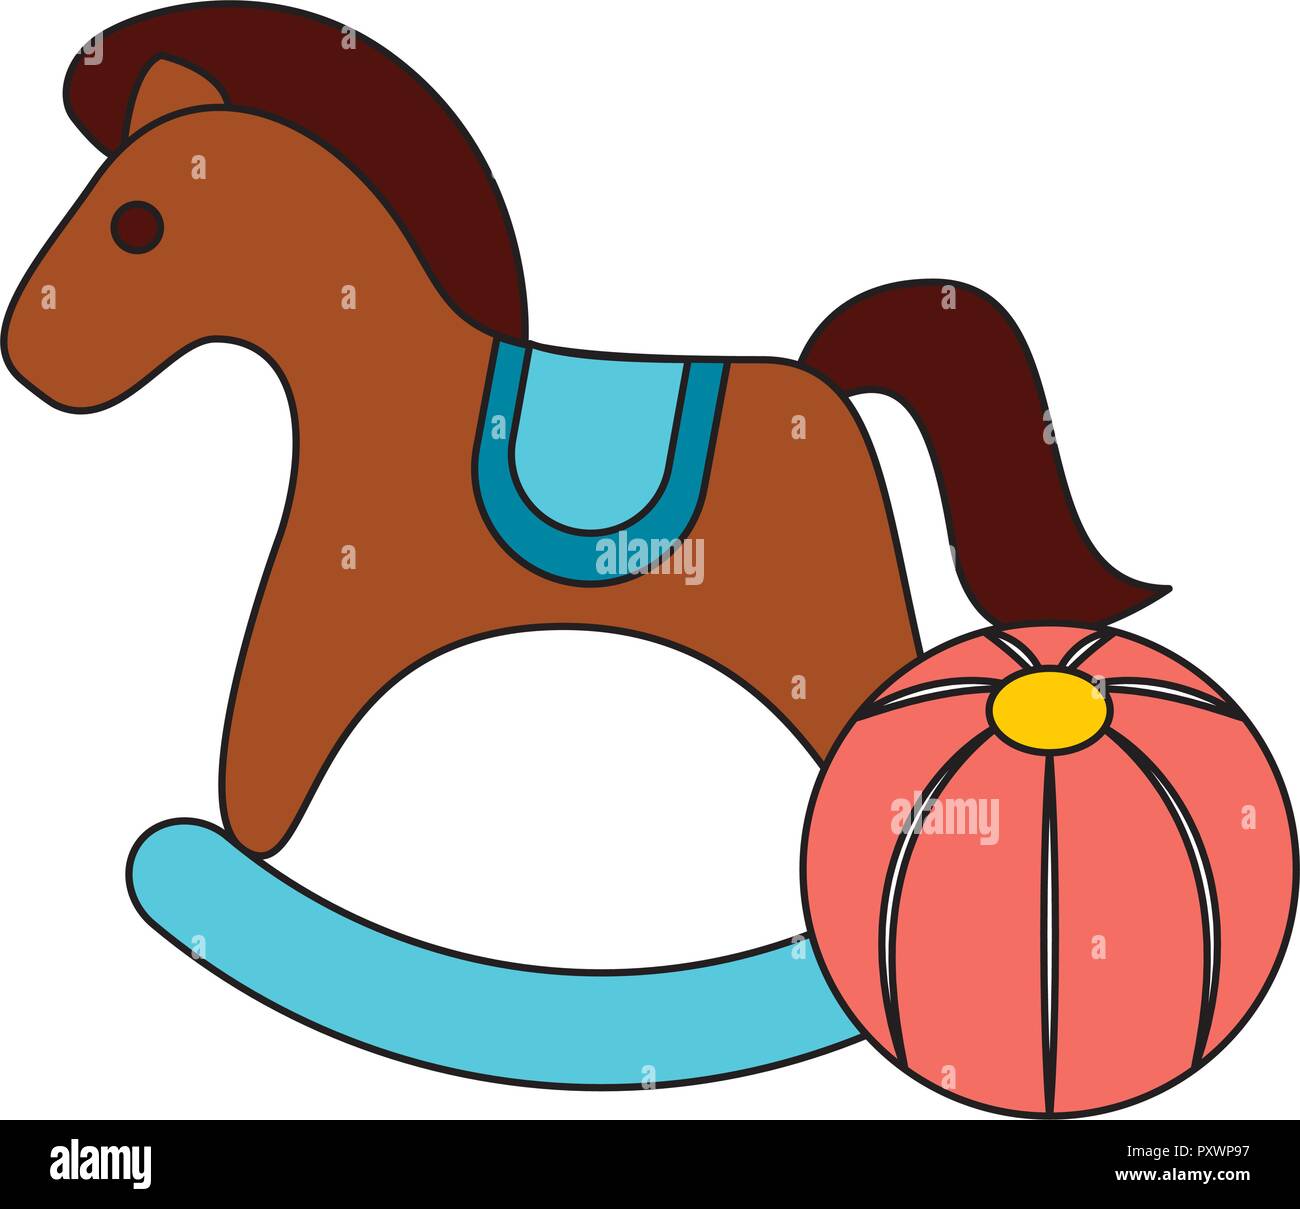 rocking horse rubber ball kid toys vector illustration Stock Vector